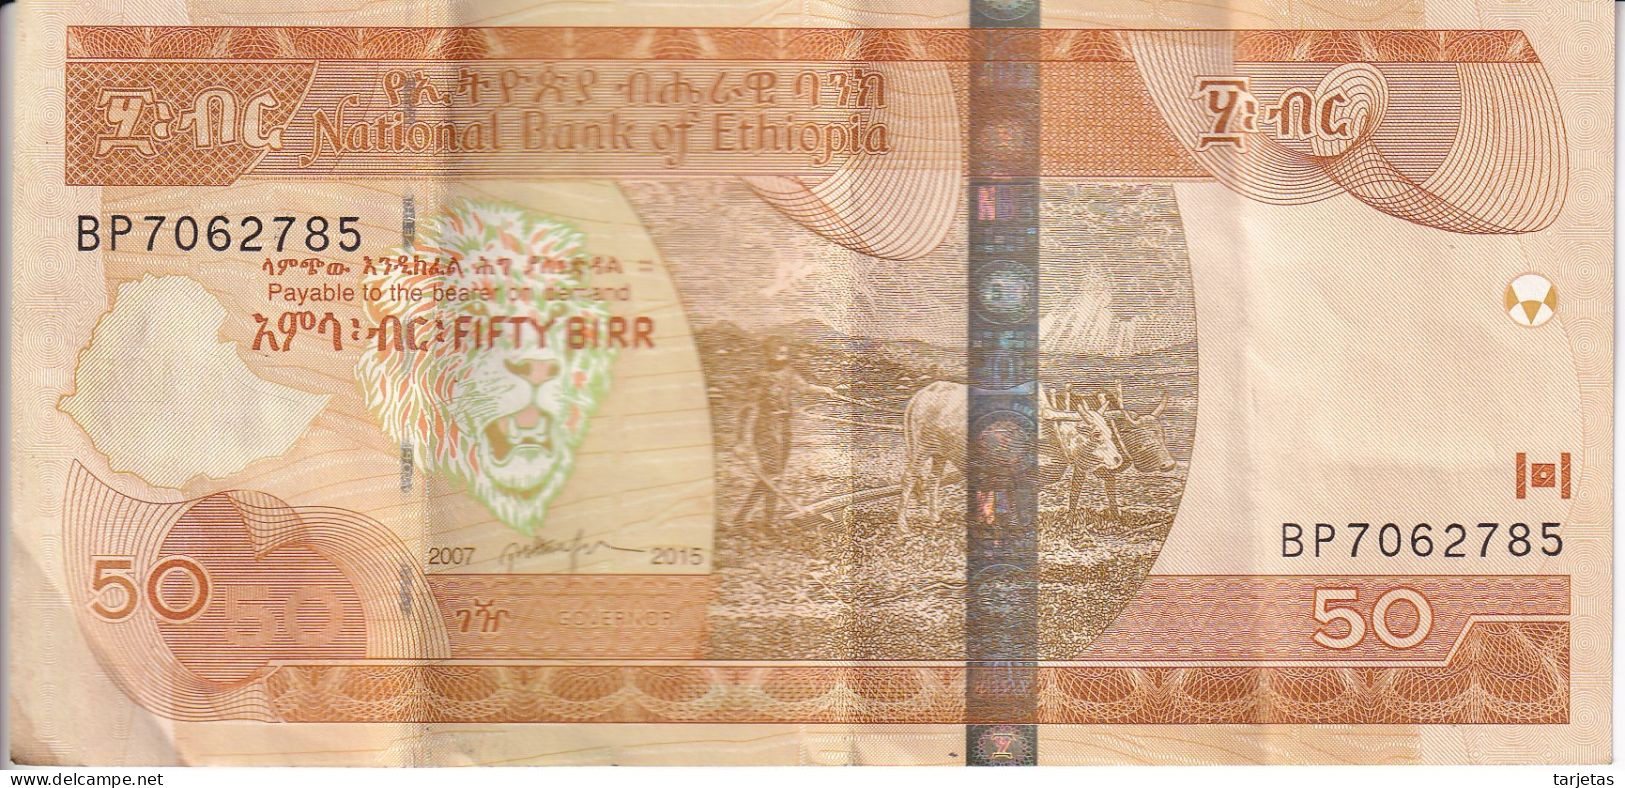 BILLETE DE ETIOPIA DE 50 BIRR DEL AÑO 2007 (BANK NOTE) - Etiopia